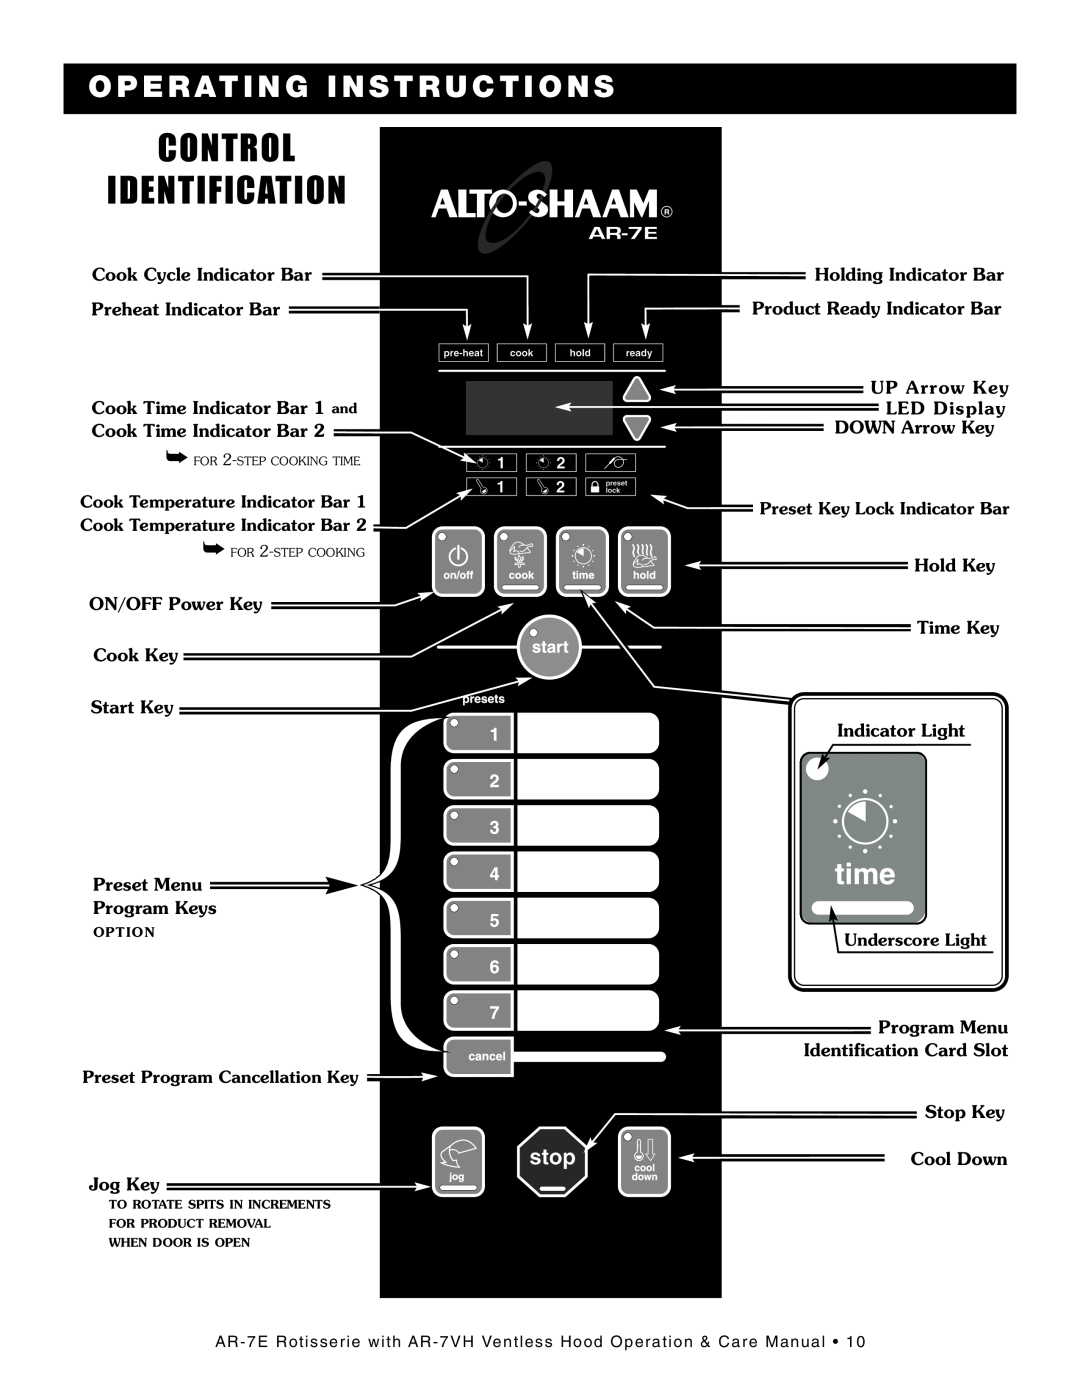 Alto-Shaam AR-7VH manual Op Er Ating Instru Ction S, Identicontrolfication 